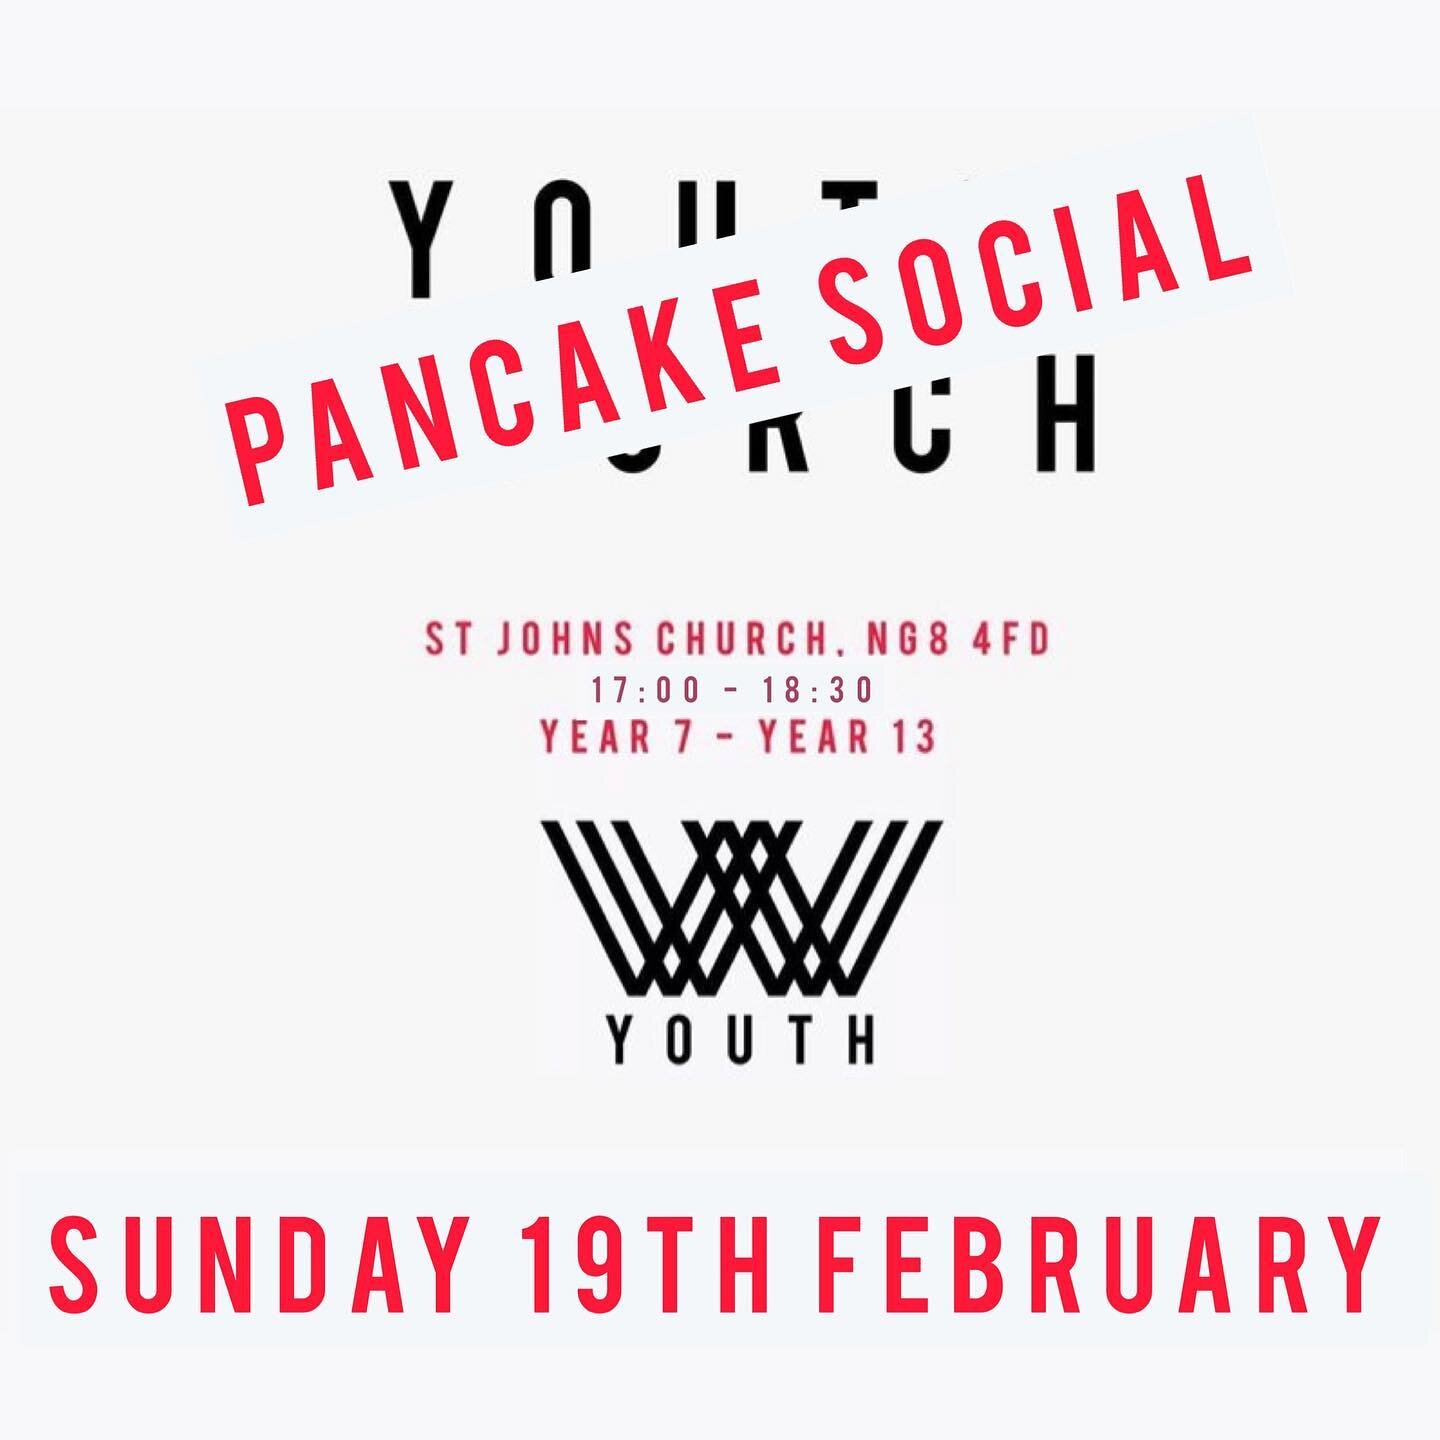 Pancake social at Youth Church on the 19th!